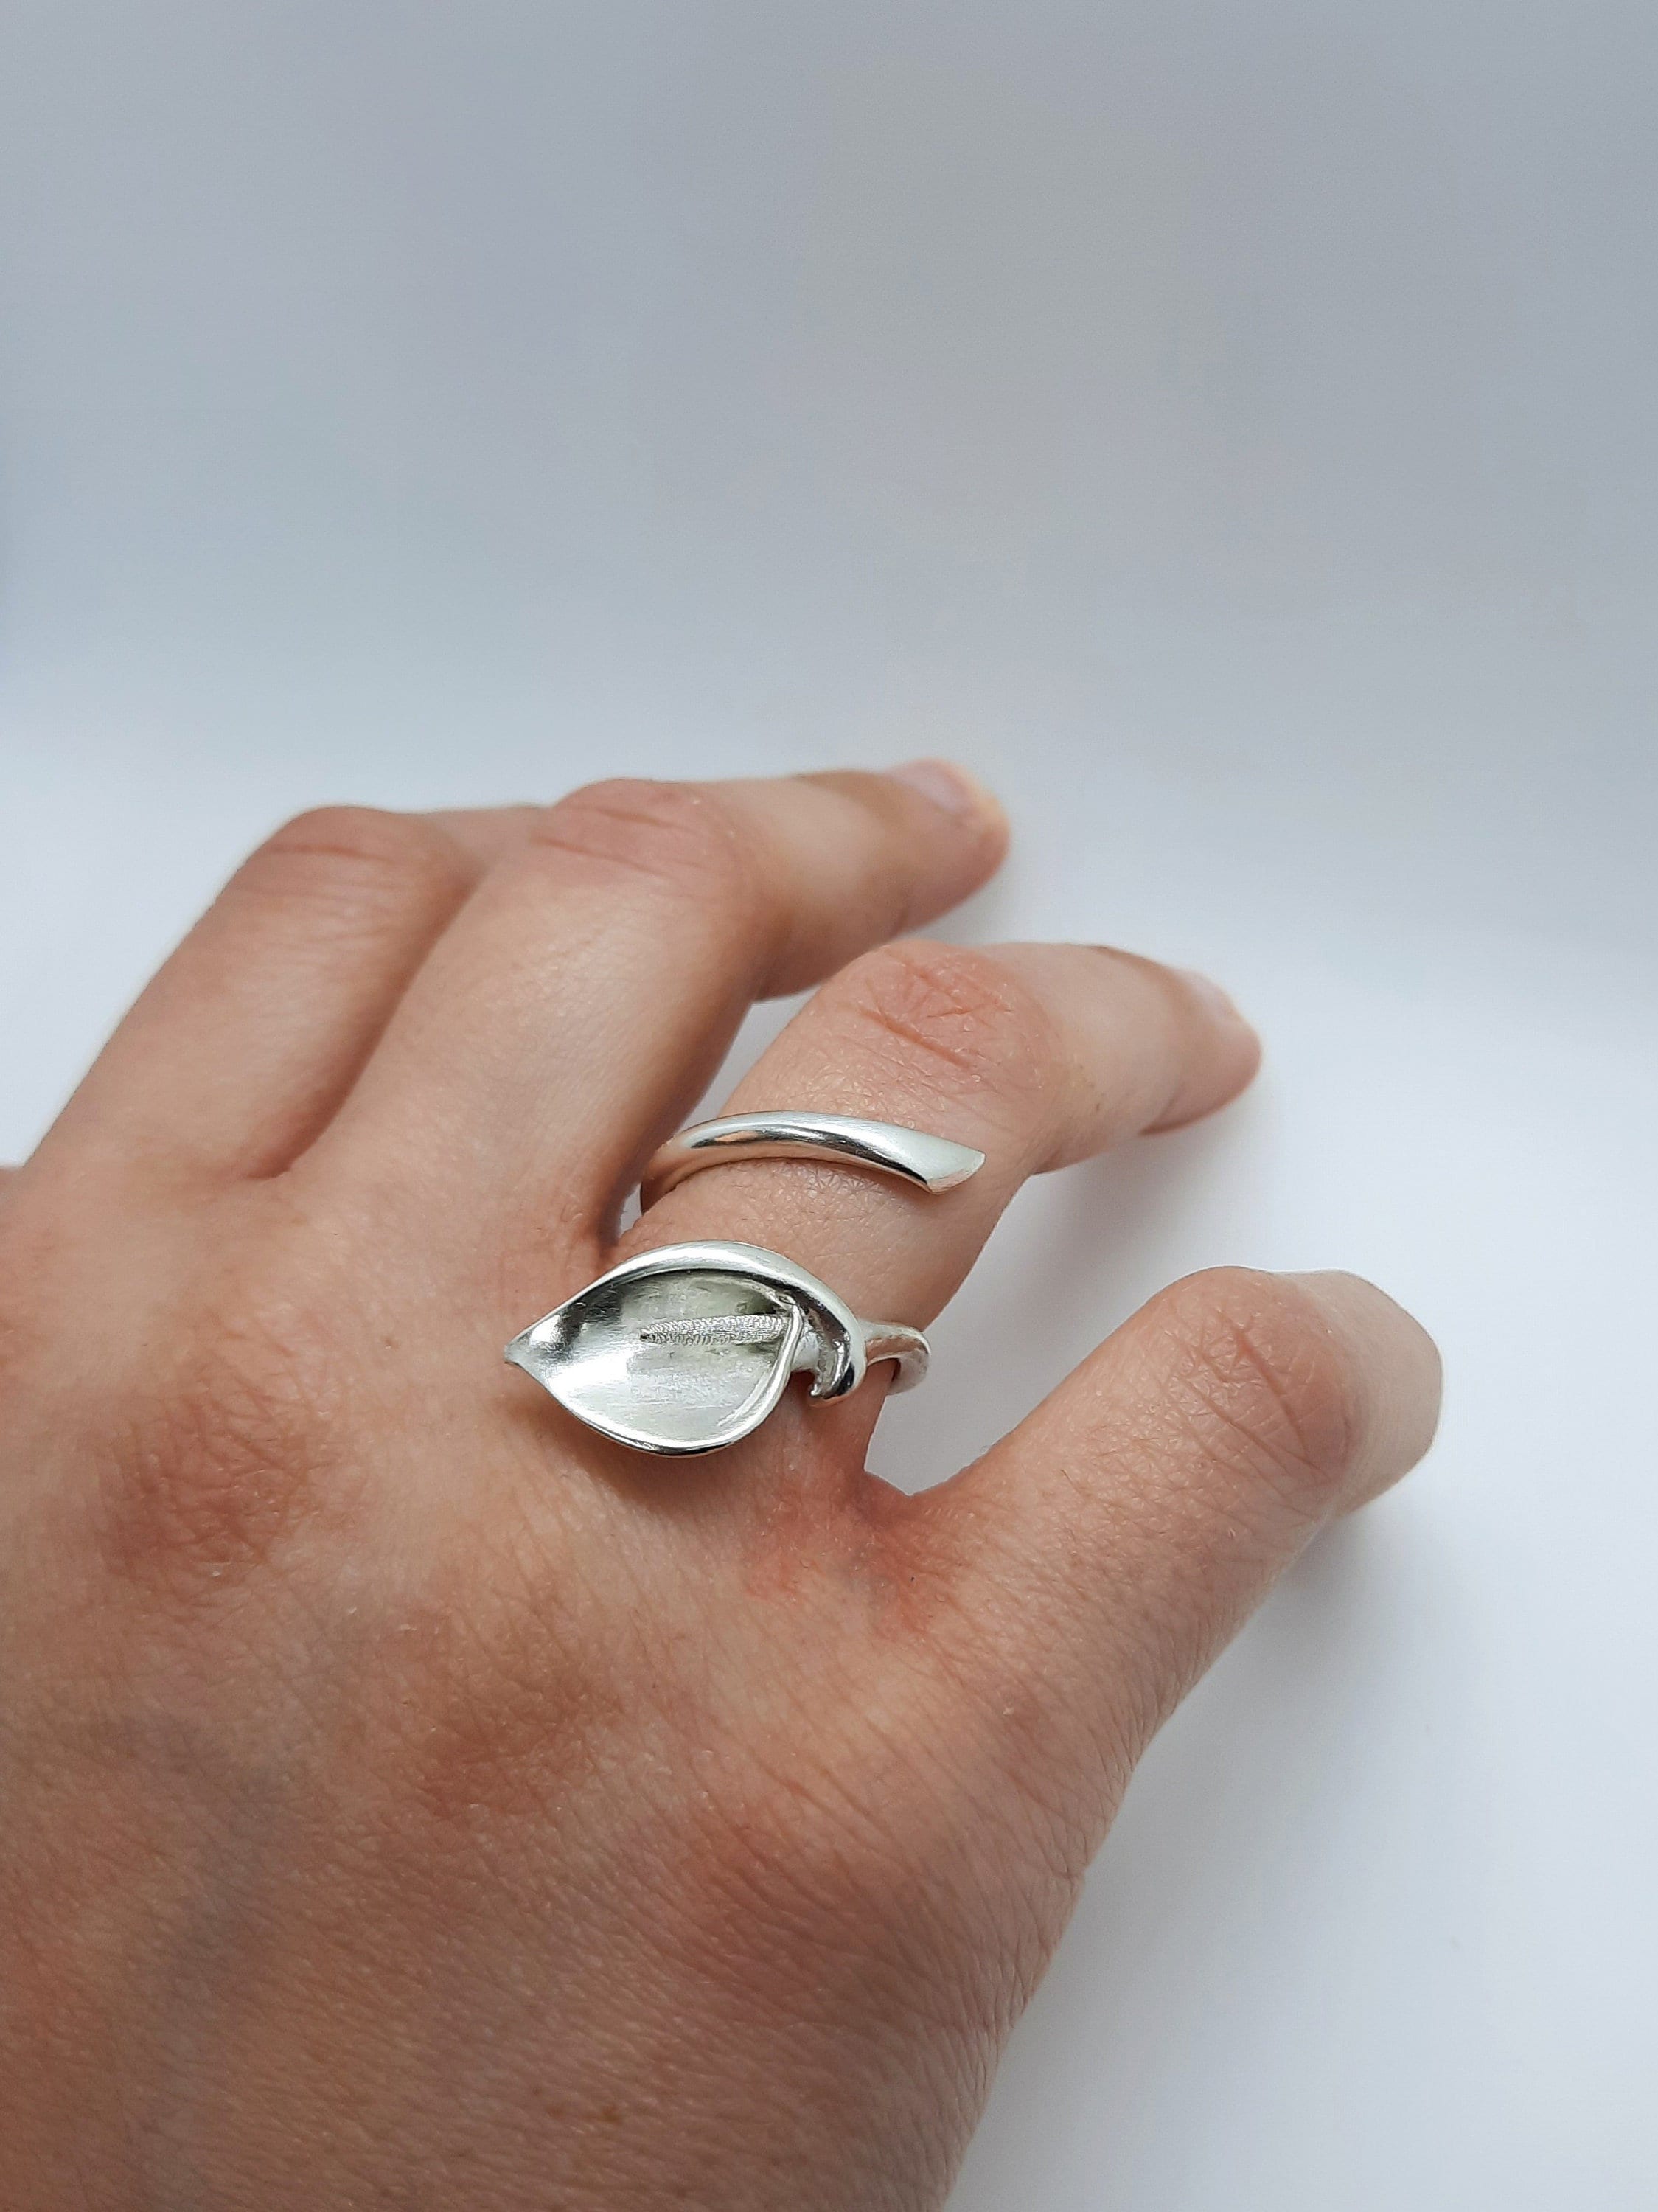 Silver Metal Rings for Crafts, Metal Rings for Macrame Hanging